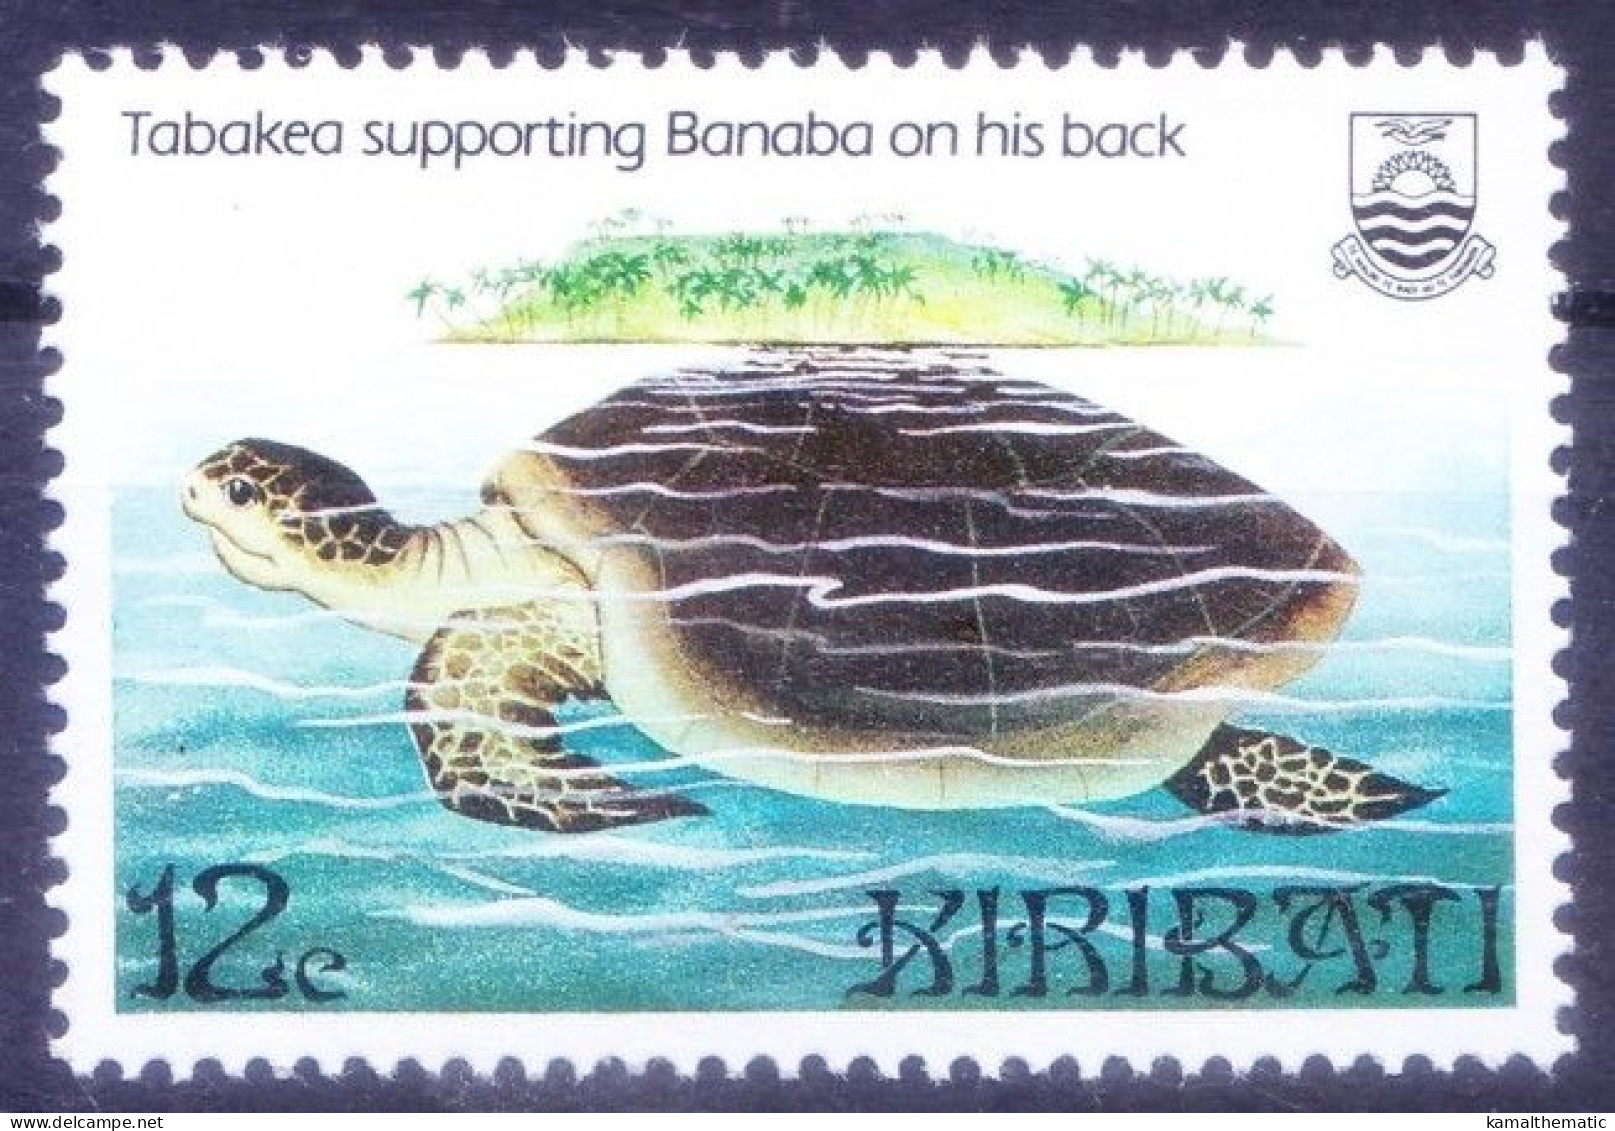 Kiribati 1984 MNH, Tabakea The Turtle God, Supporting Banaba Island On Back. - Schildpadden